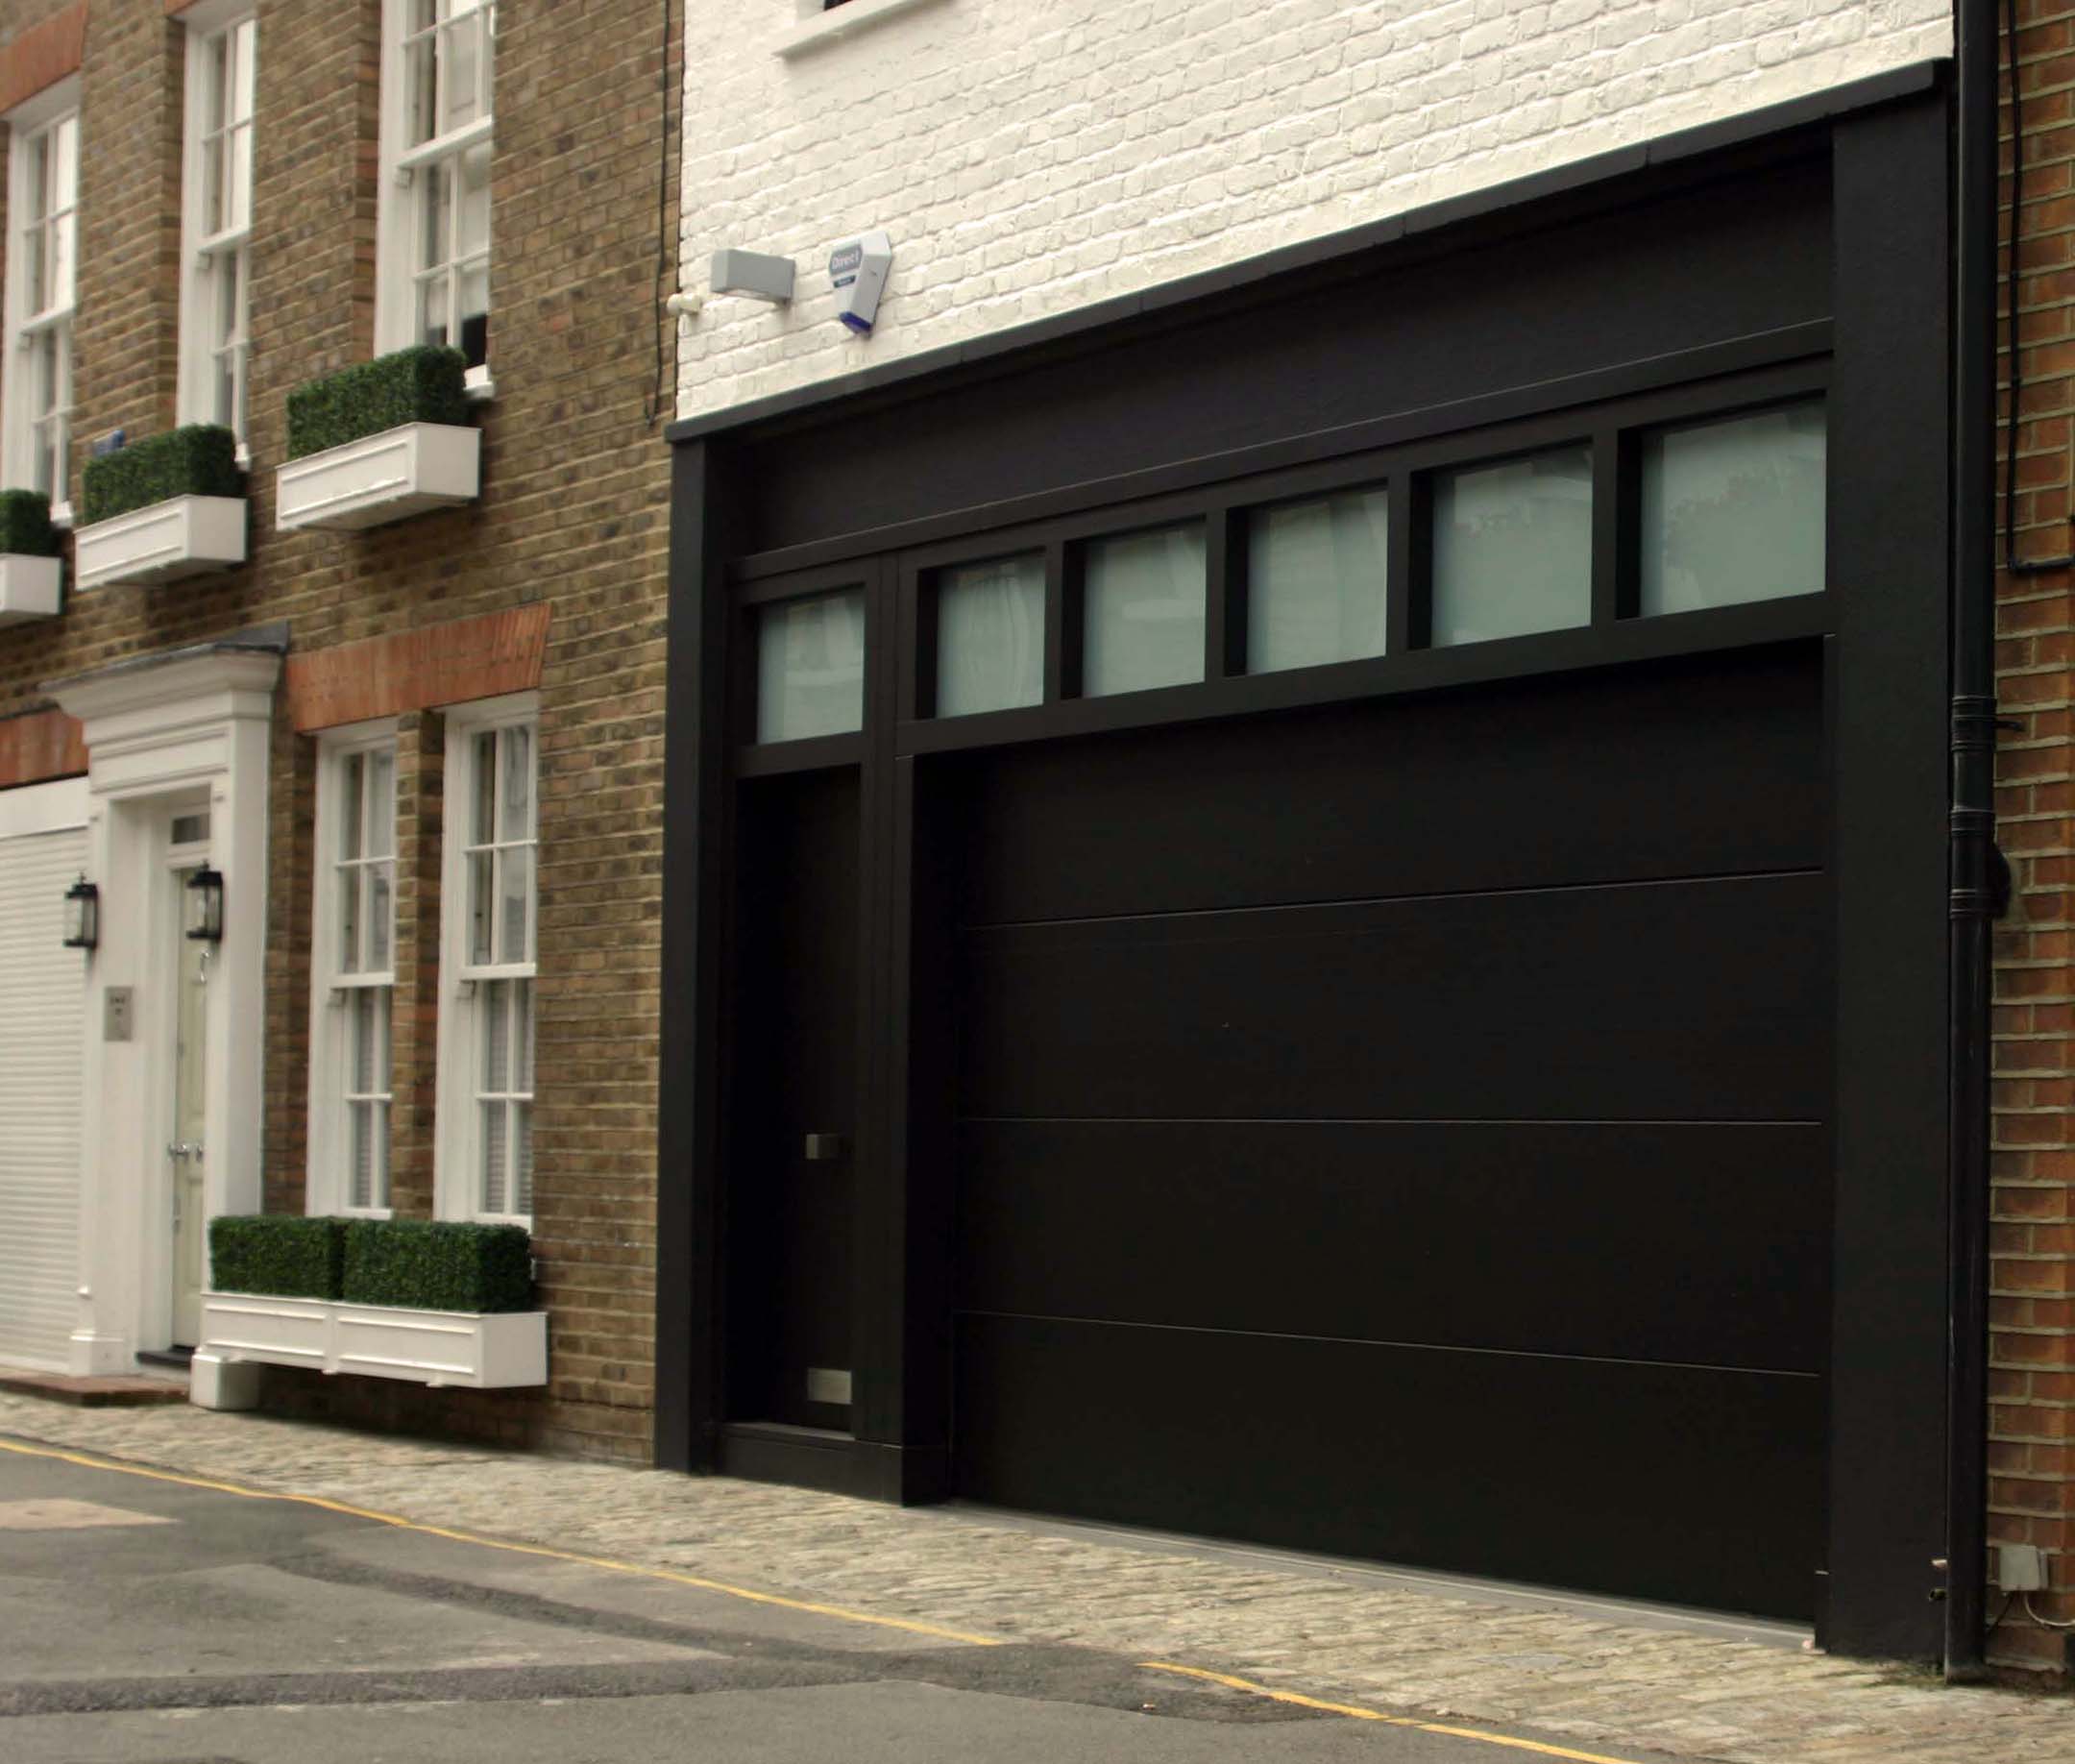 Design Of English Marvelous Garage Design Of A Classic English House With White Painted Brick Walls Black Sliding Garage Door Elegant Sliding Garage Doors In Natural Colour